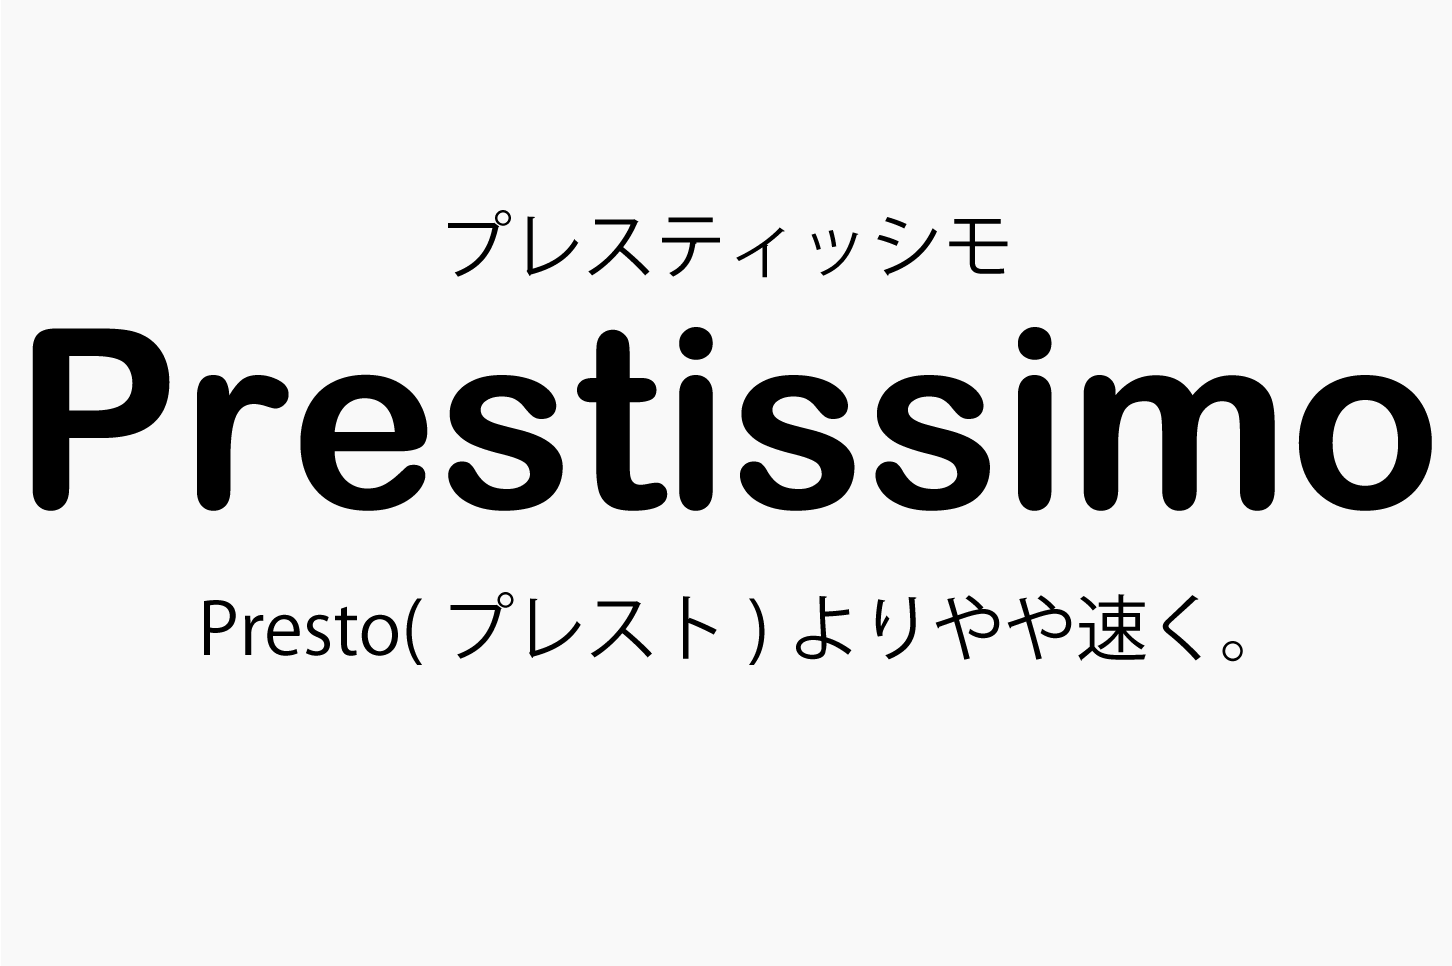 Prestissimo（プレスティッシモ）Presto（プレスト）よりやや速く。